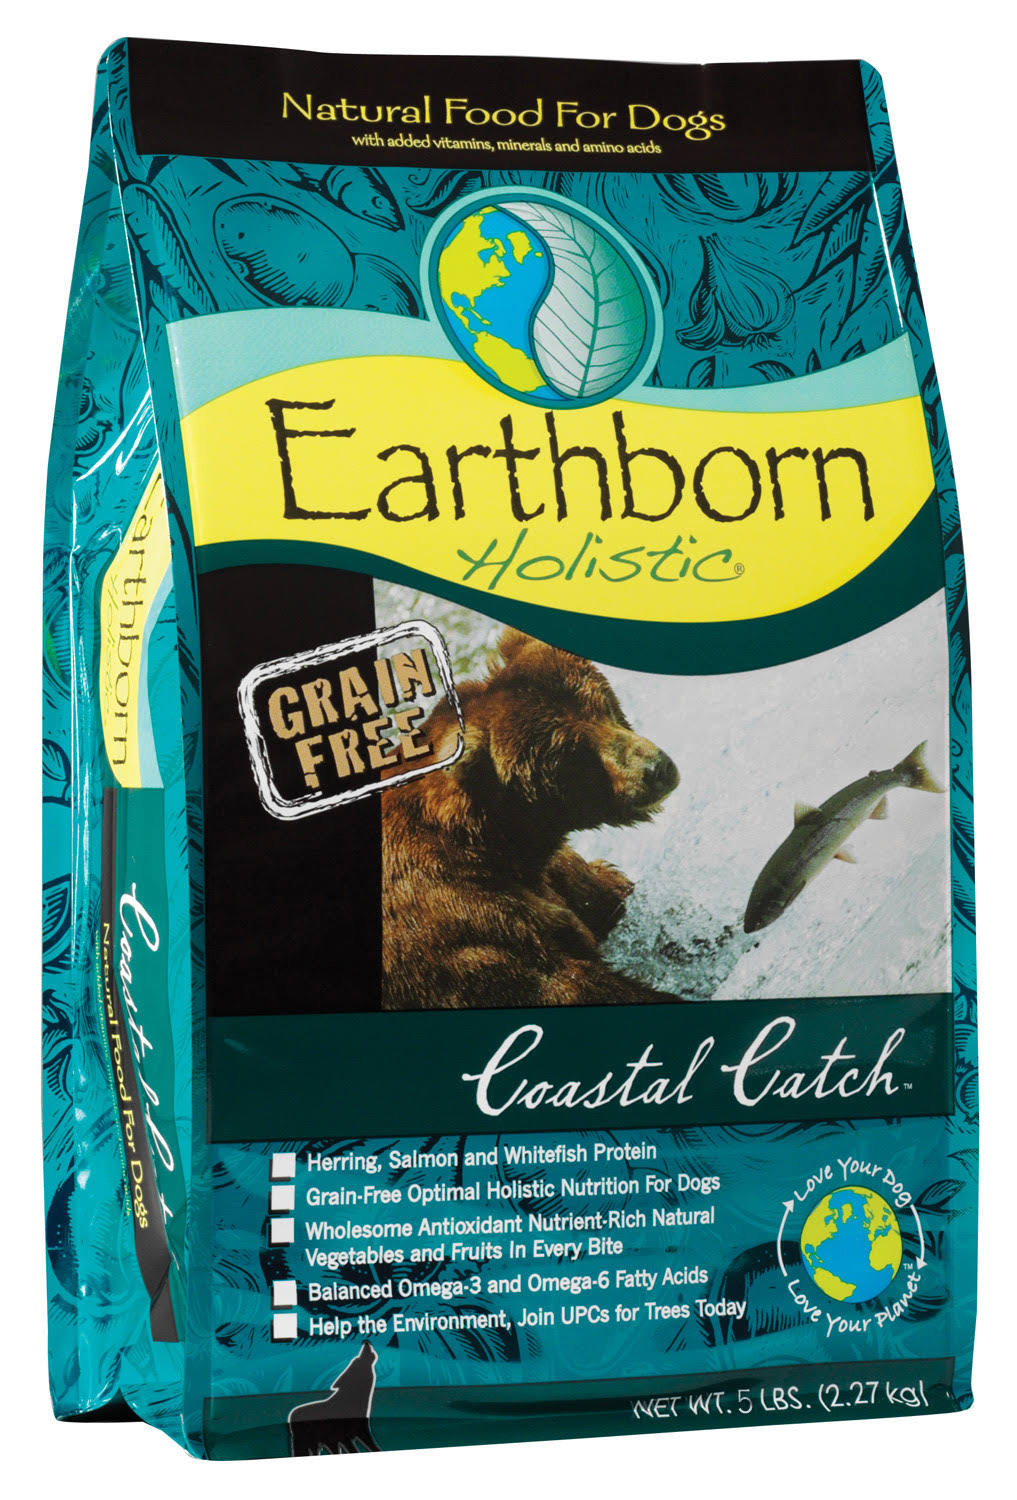 Earthborn Holistic Grain-Free Coastal Catch Dry Dog Food